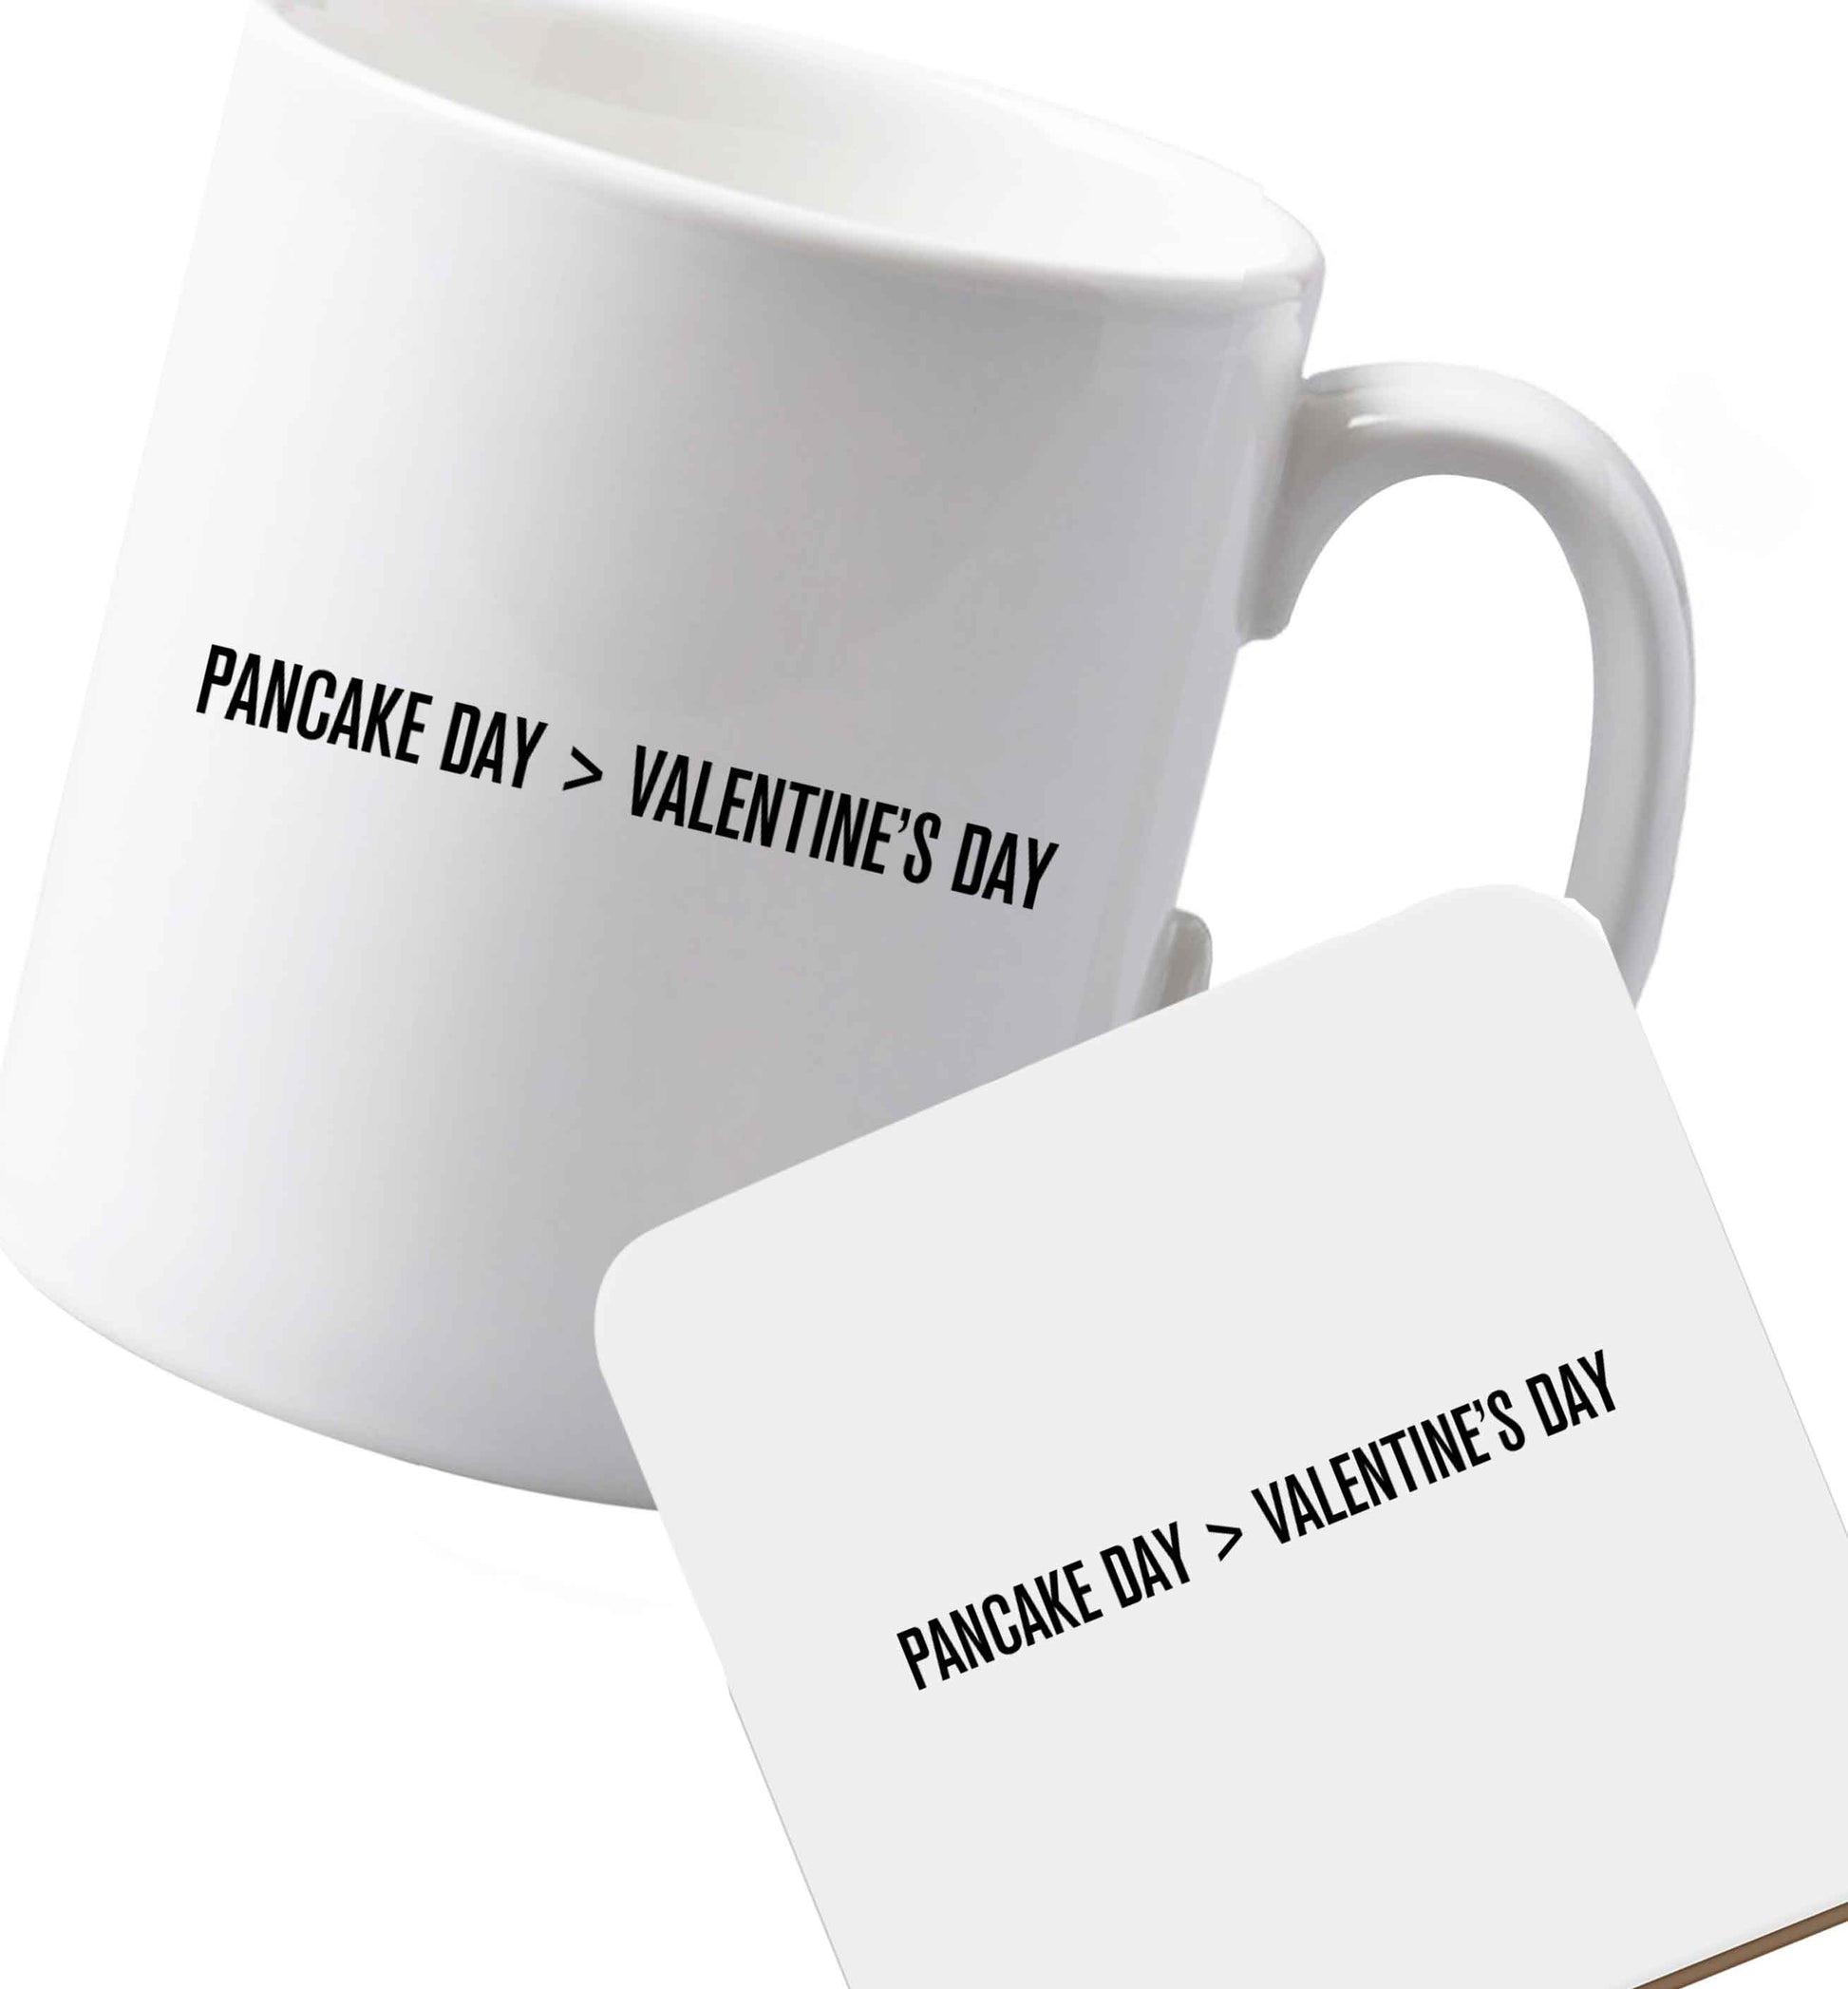 10 oz Ceramic mug and coaster Pancake day > valentines day both sides